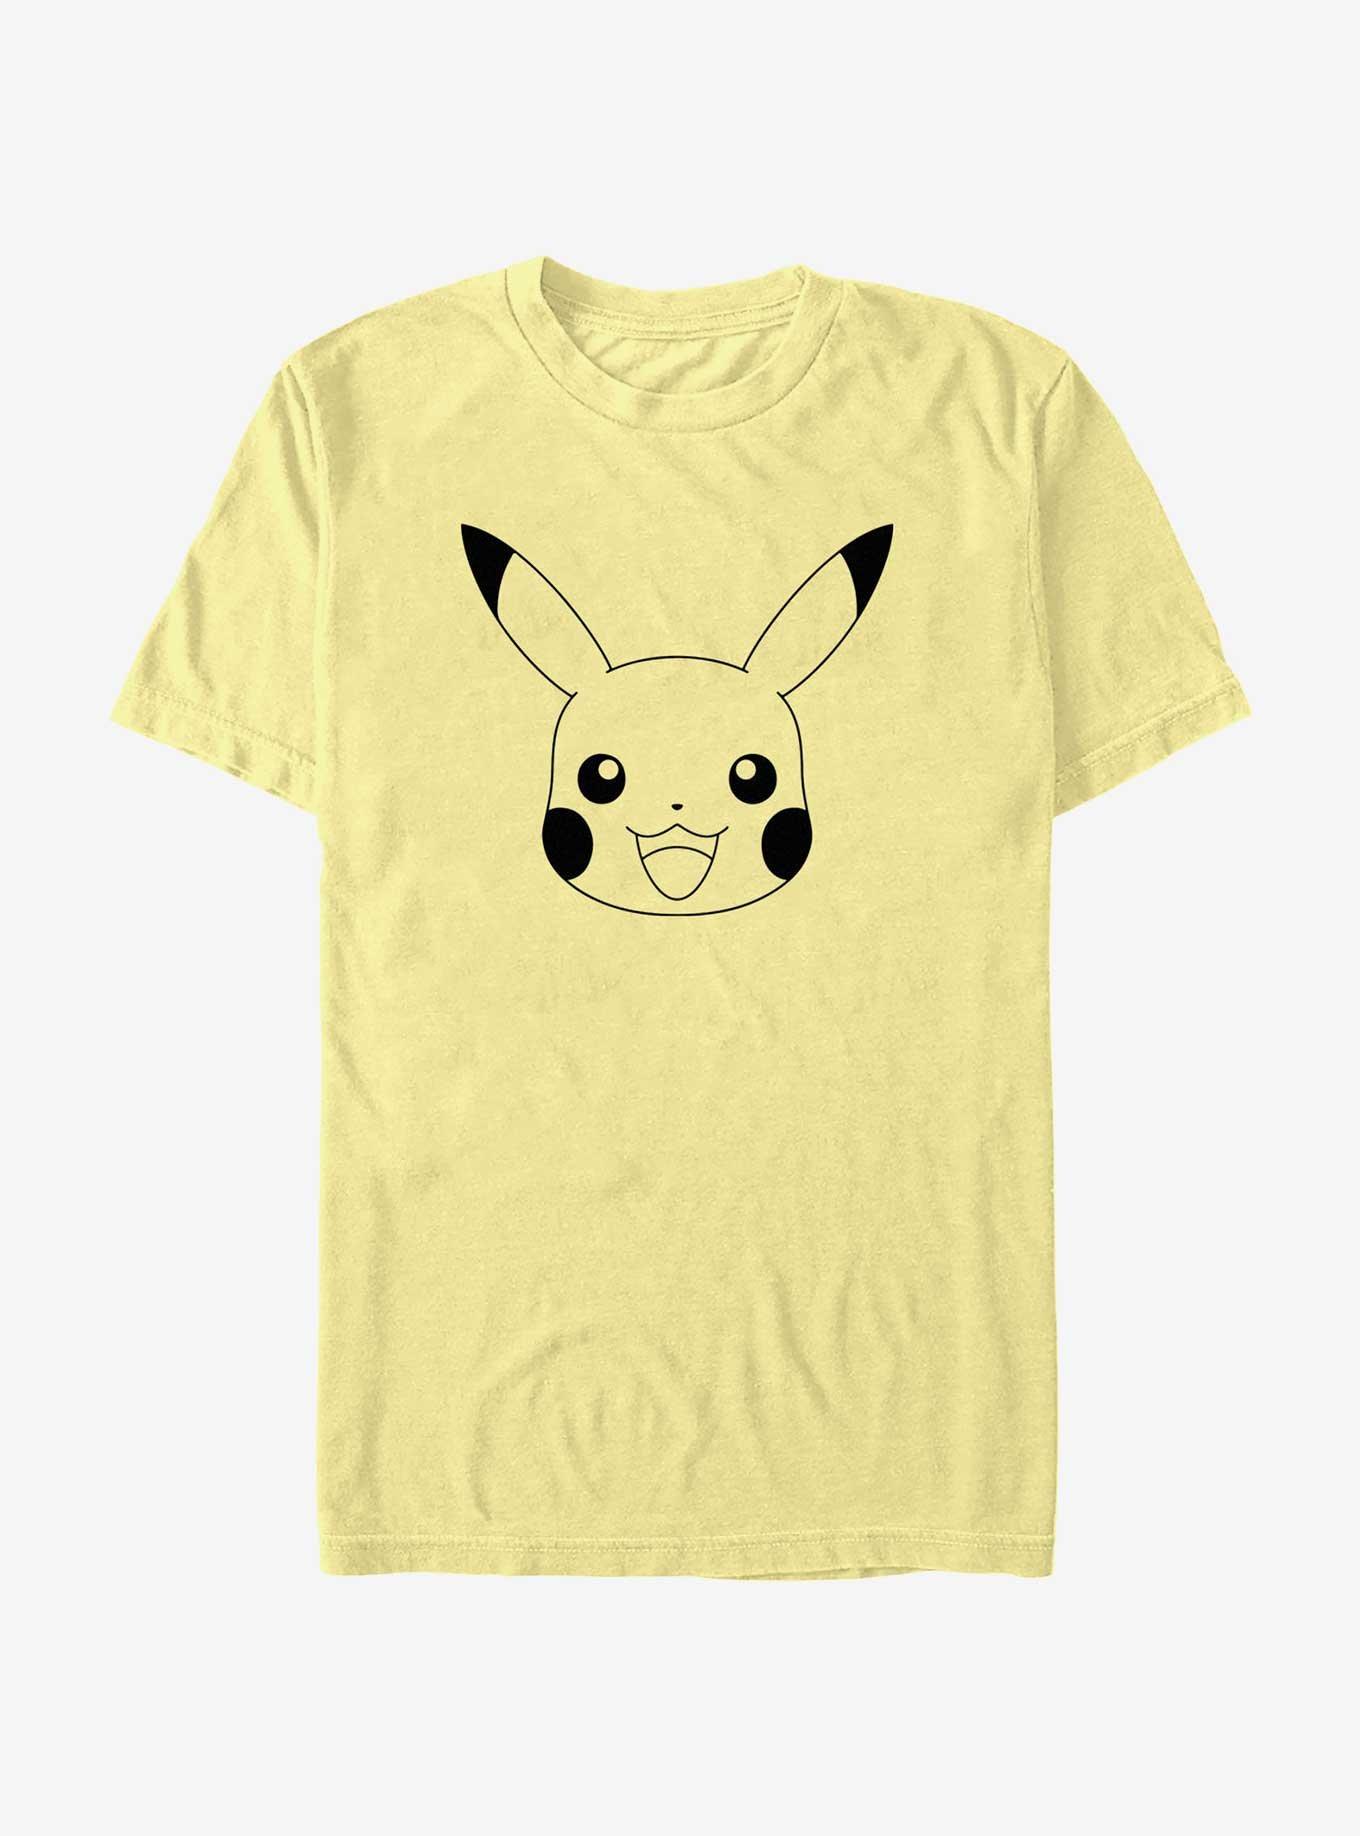 Pikachu Pokemon Iron On Transfer For T-Shirt + Other Light & Dark